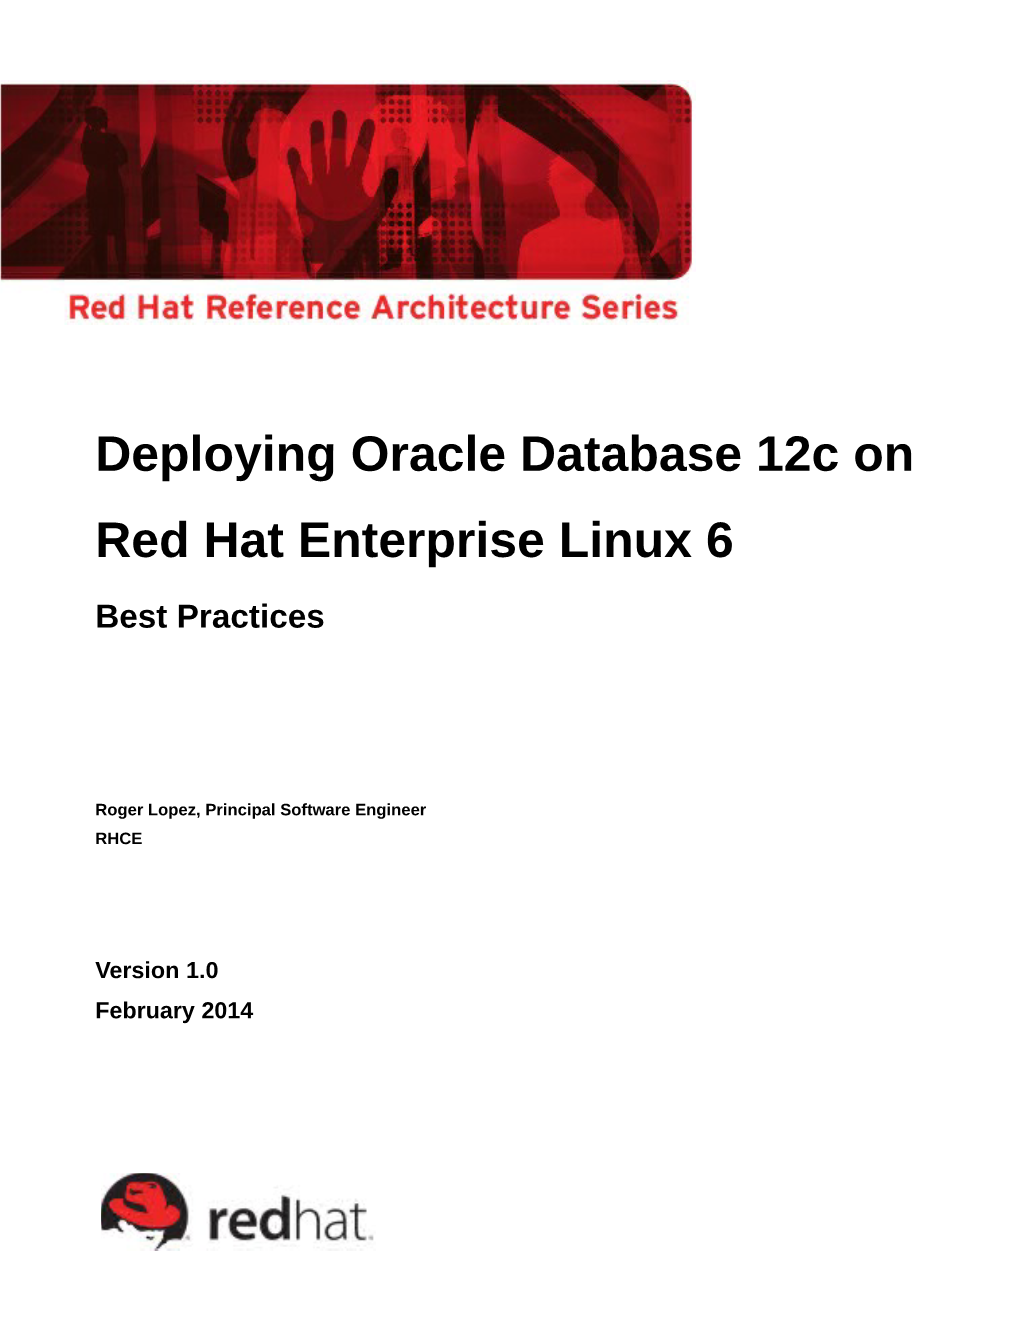 Deploying Oracle Database 12C on Red Hat Enterprise Linux 6